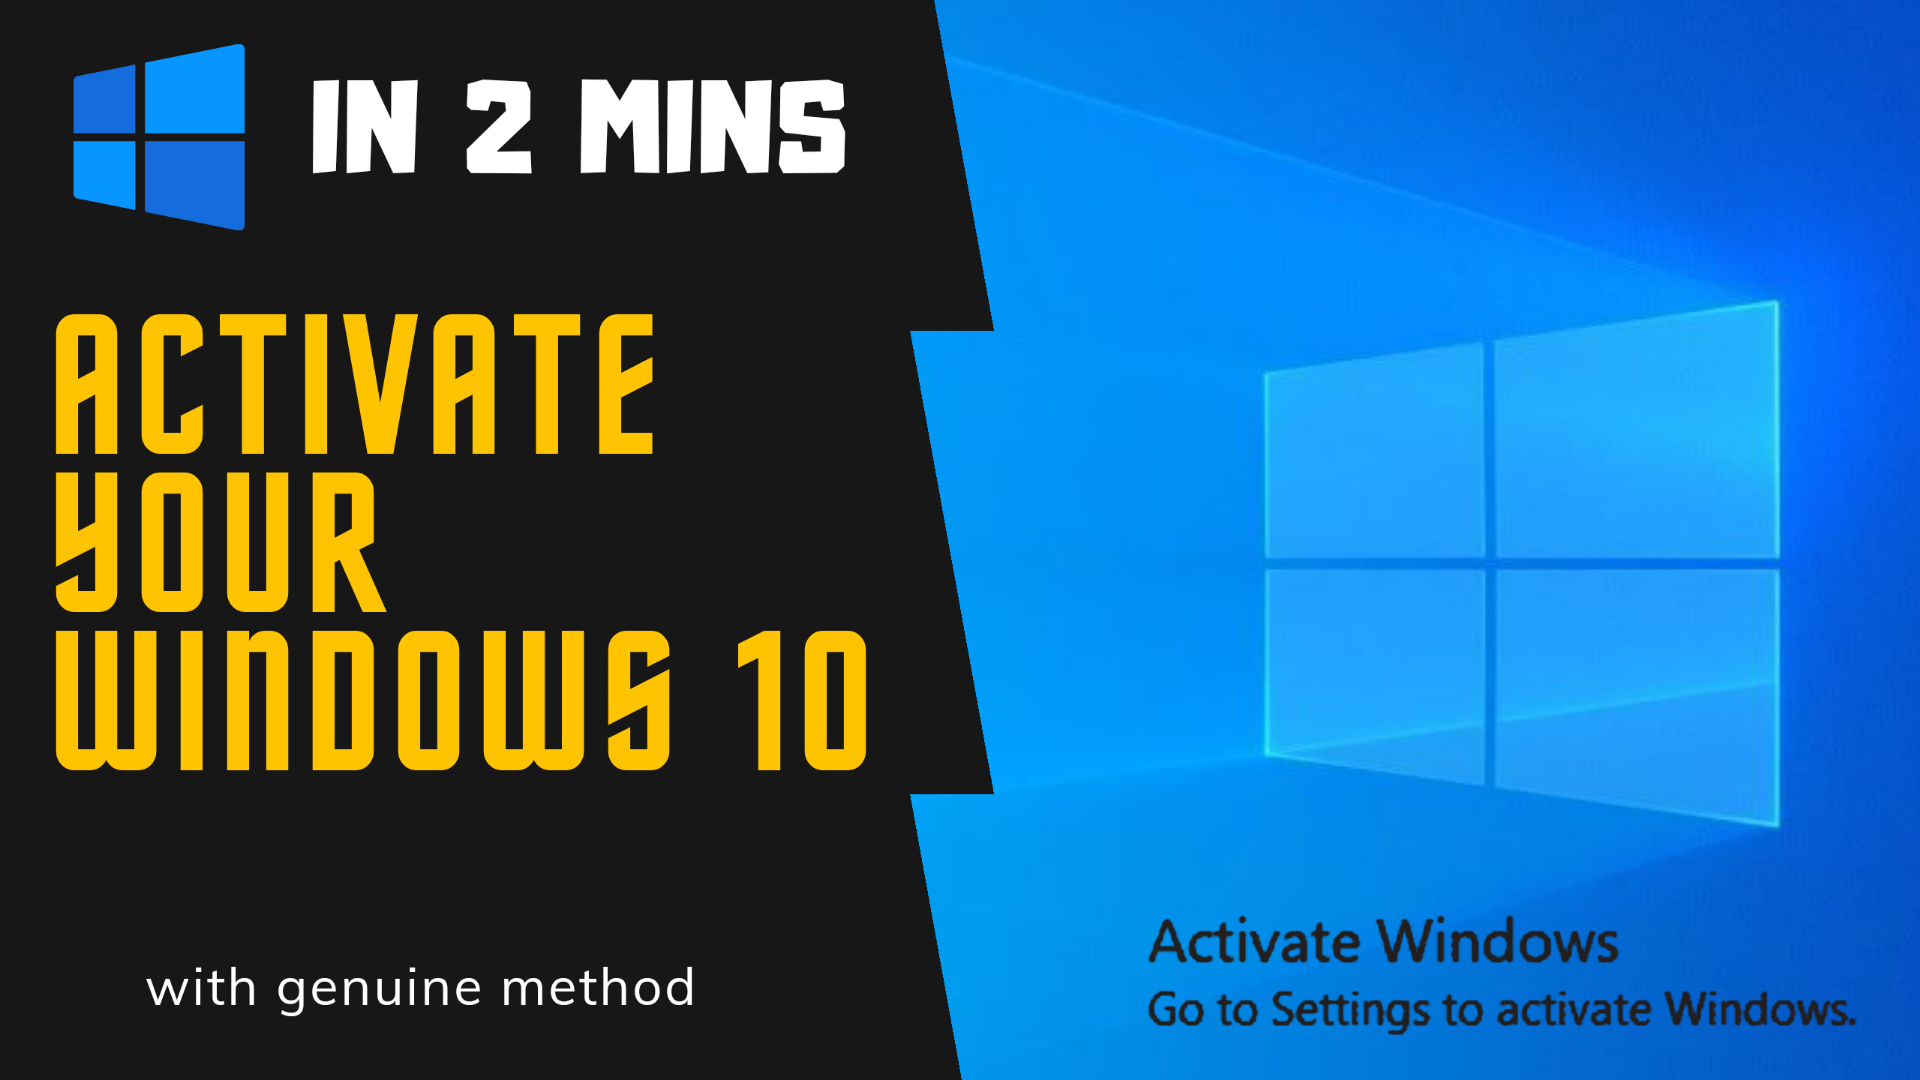 activate windows 10 pro free